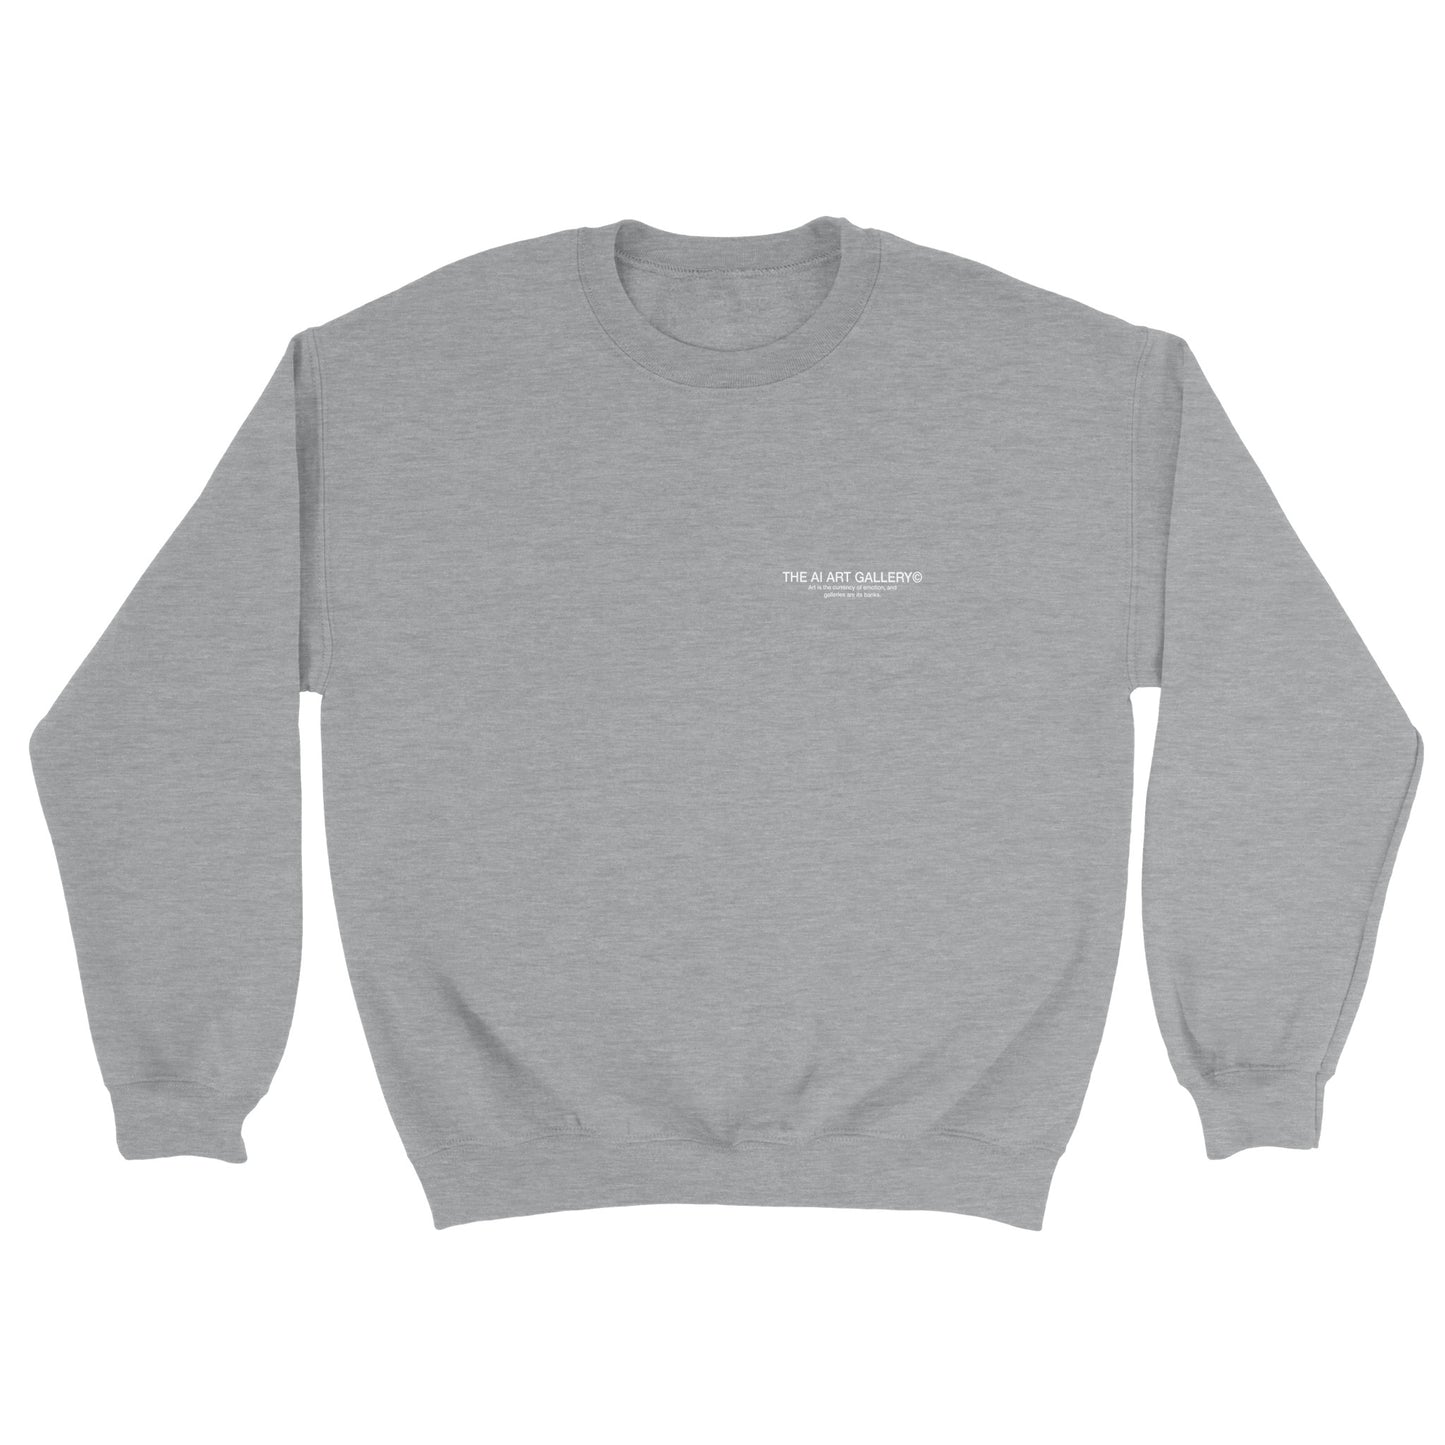 FUMIGANS FRATRIBUS / Sweatshirt / sports grey